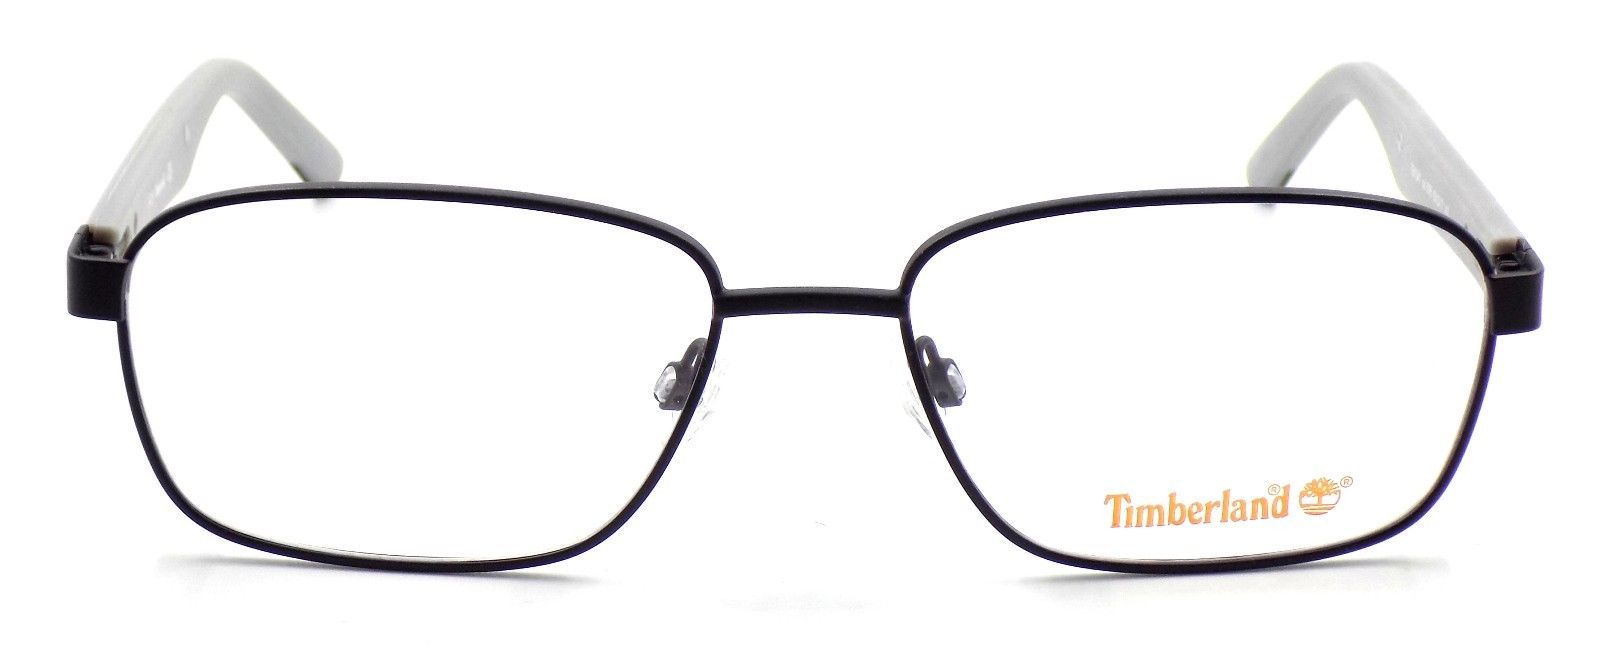 2-TIMBERLAND TB1347 005 Men's Eyeglasses Frames 55-17-140 Matte Black + CASE-664689771103-IKSpecs